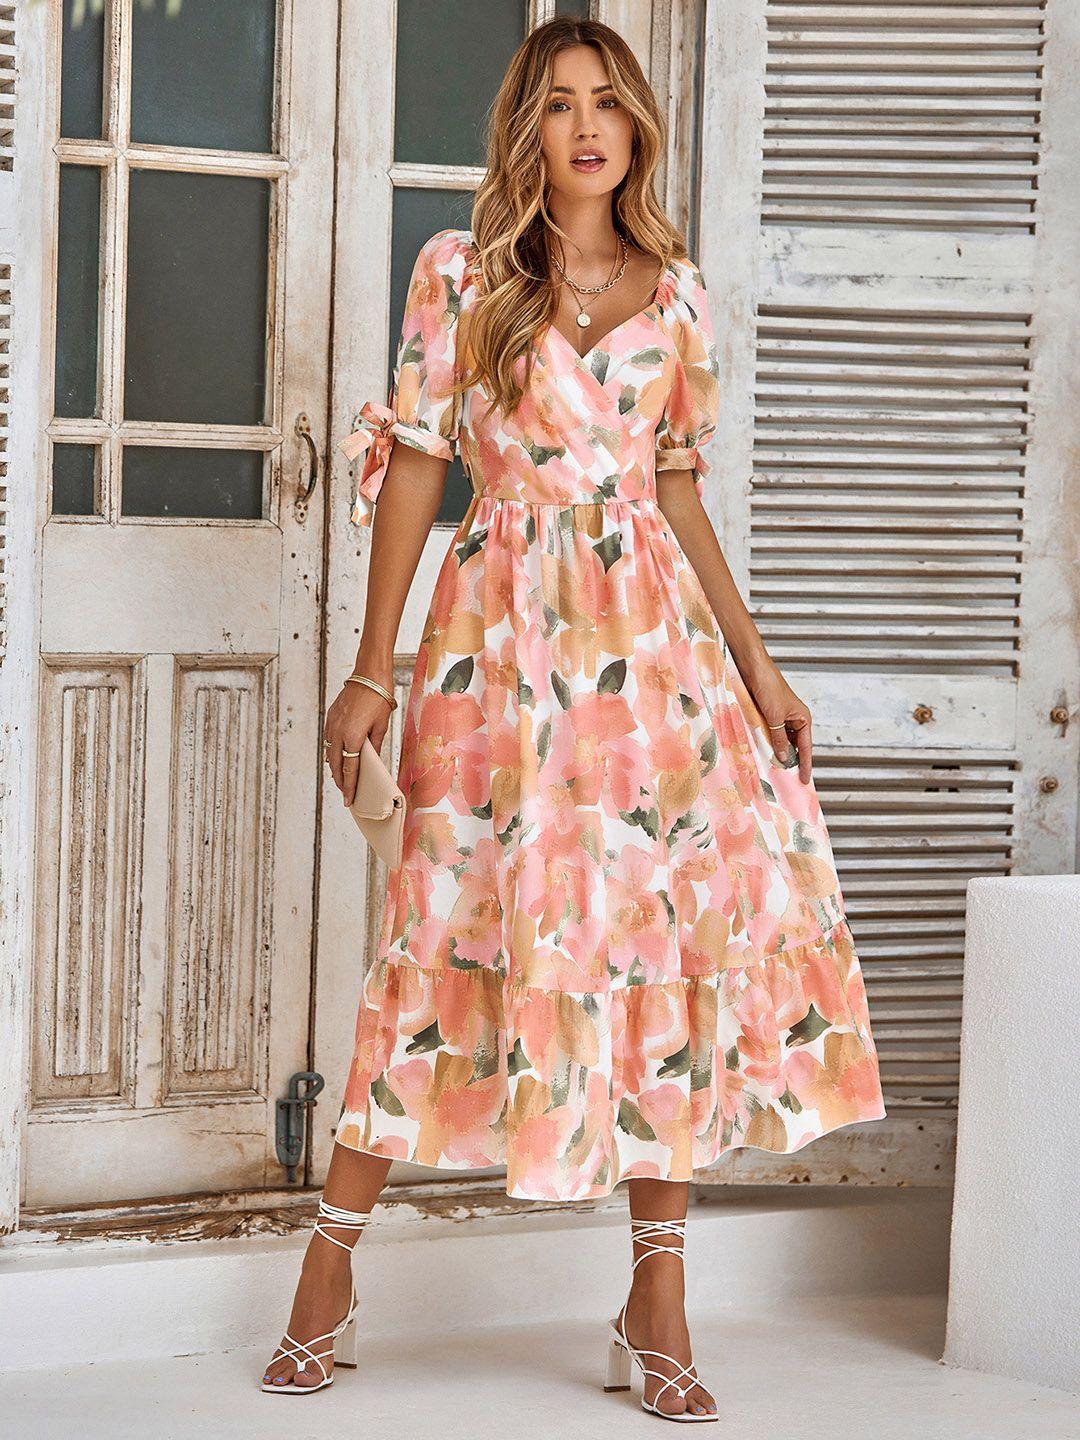 stylecast pink & white floral printed maxi midi dress